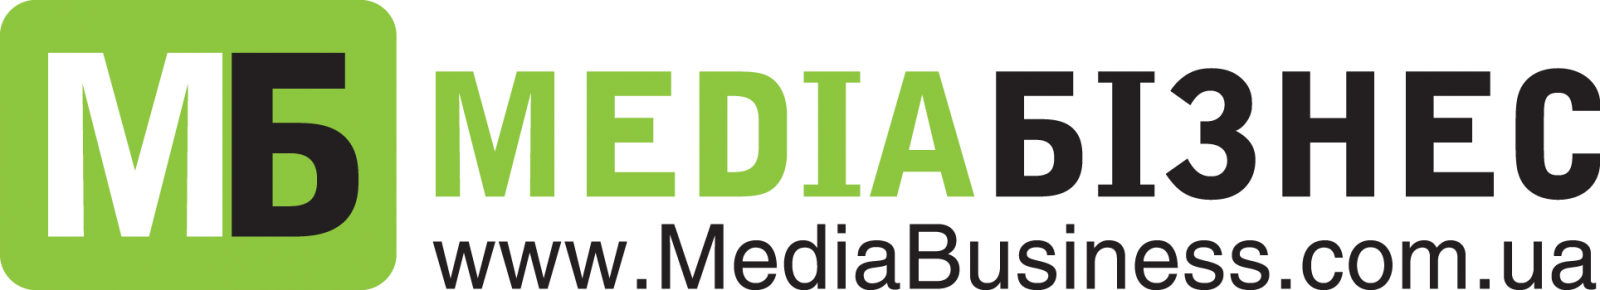 media business